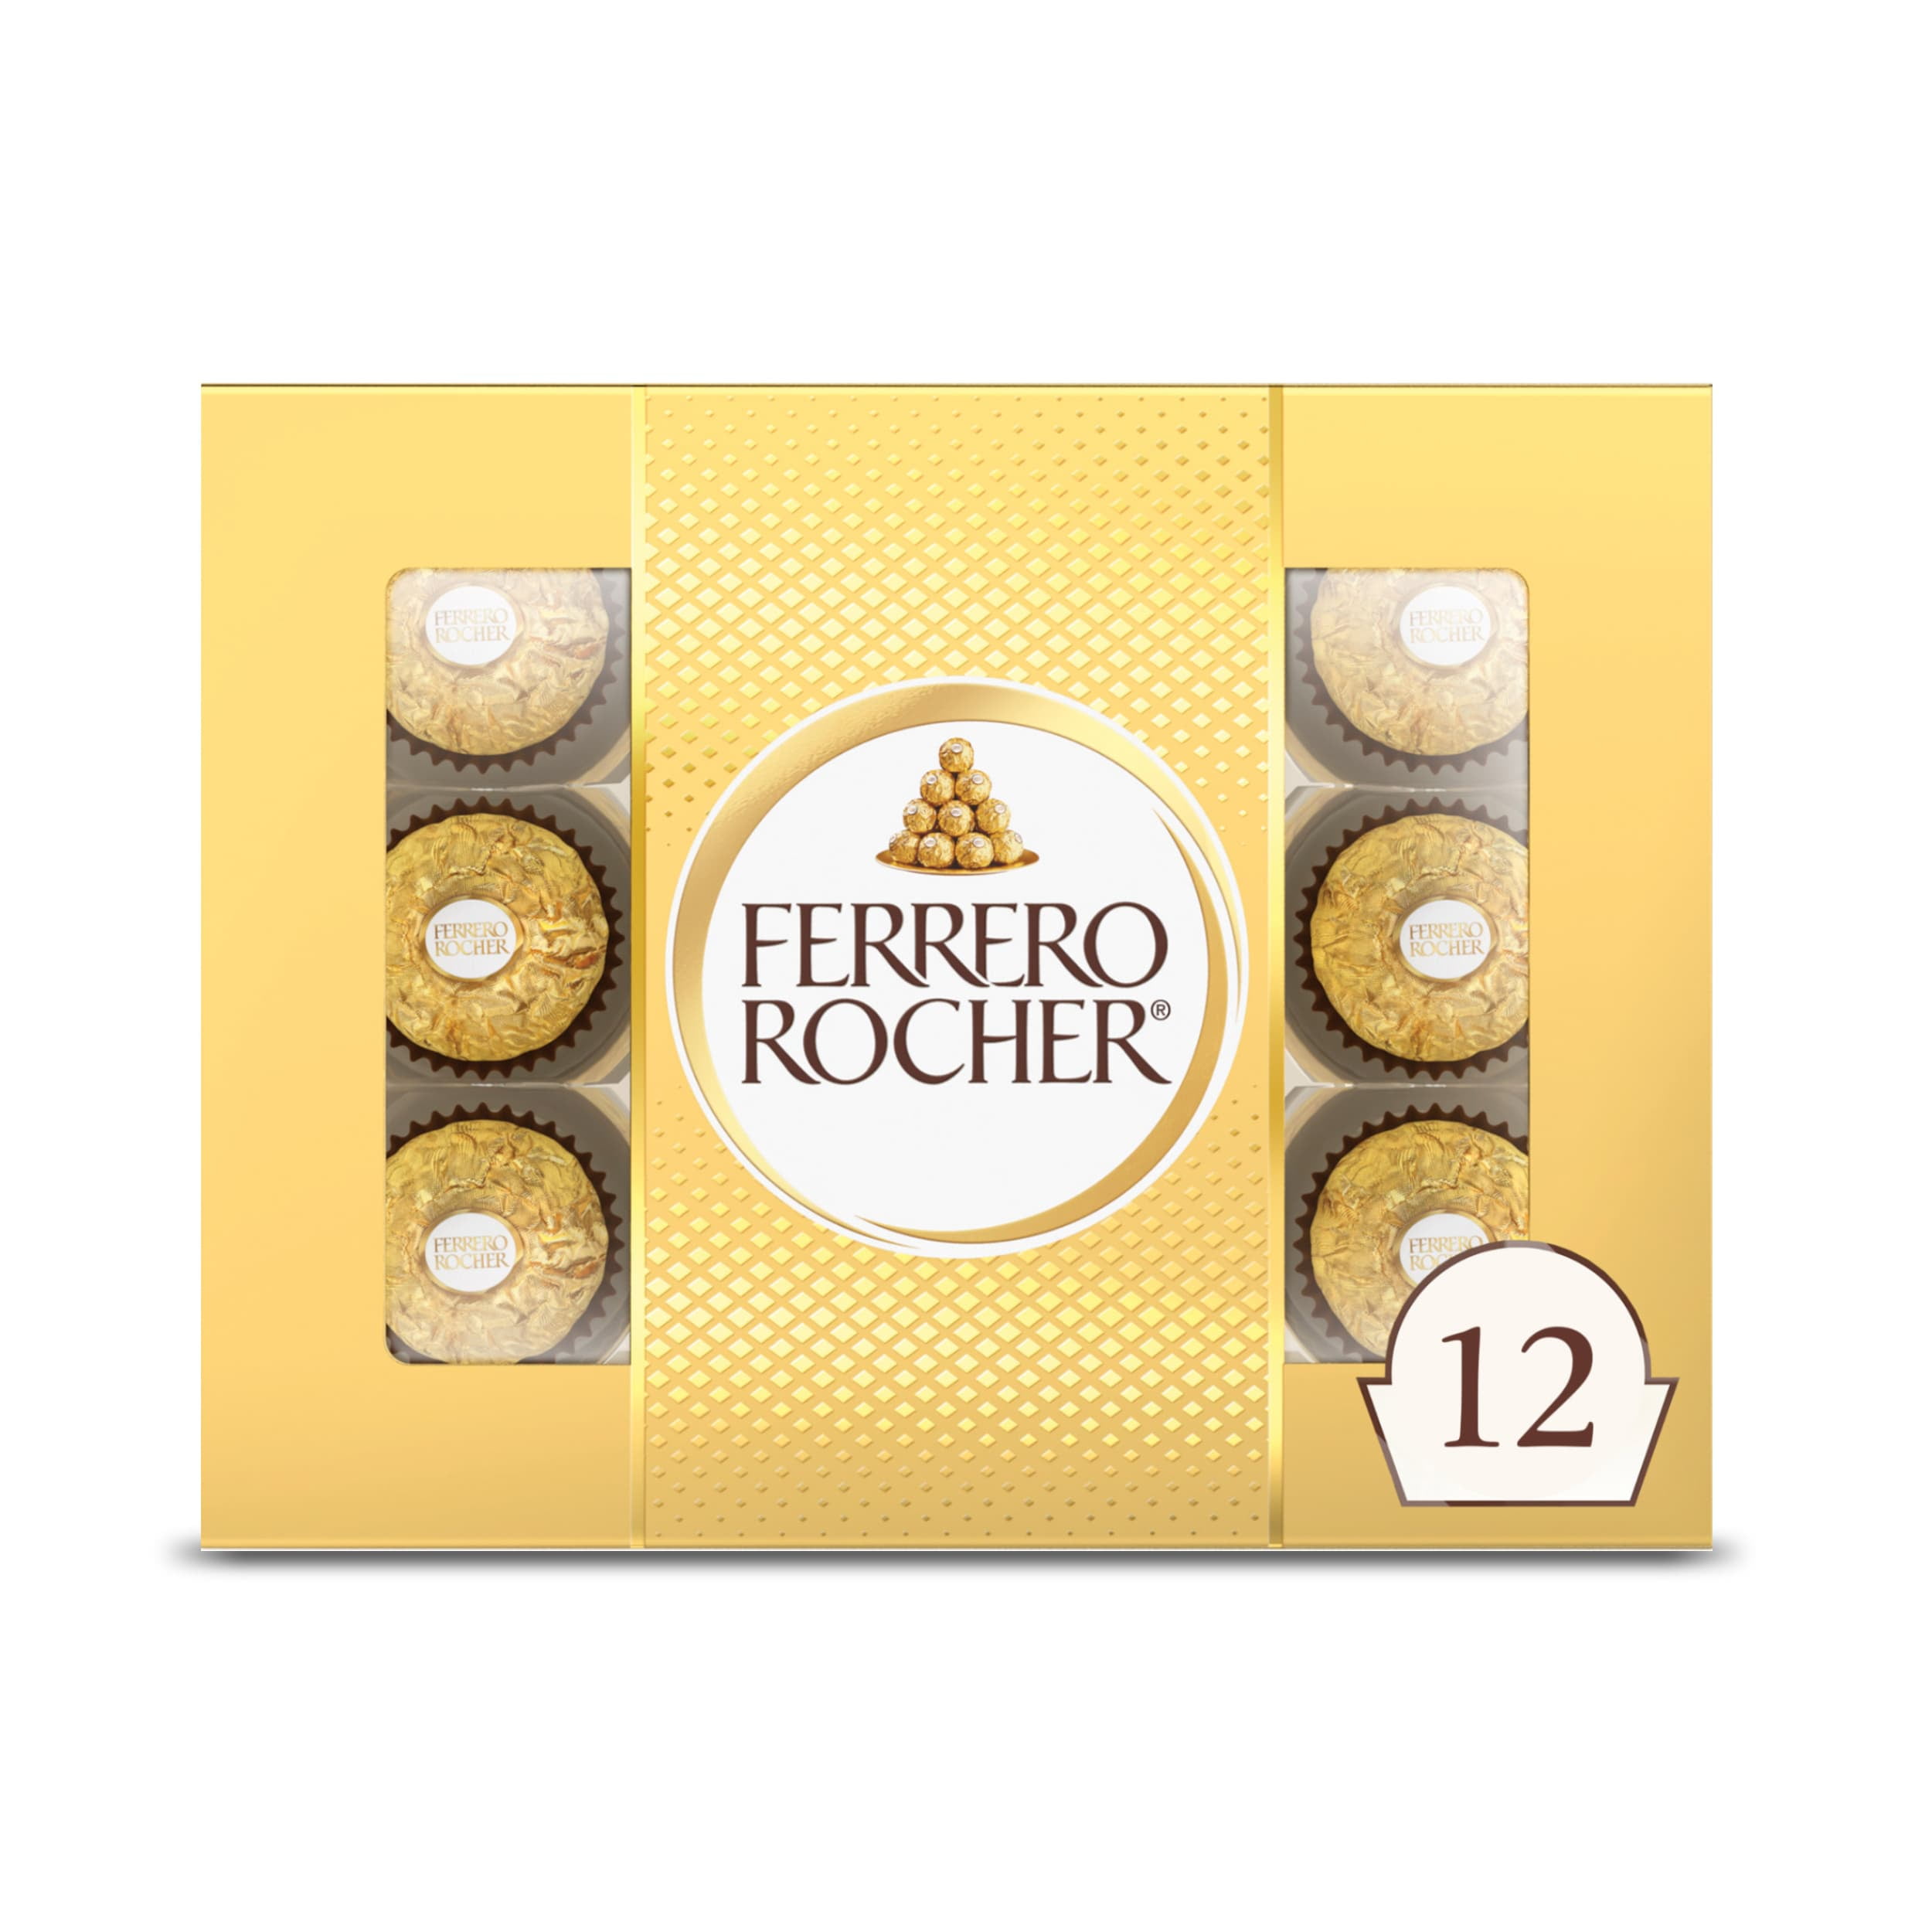 Ferrero Rocher Premium Gourmet Milk Chocolate Hazelnut, Individually Wrapped Candy for Gifting, 5.3 oz